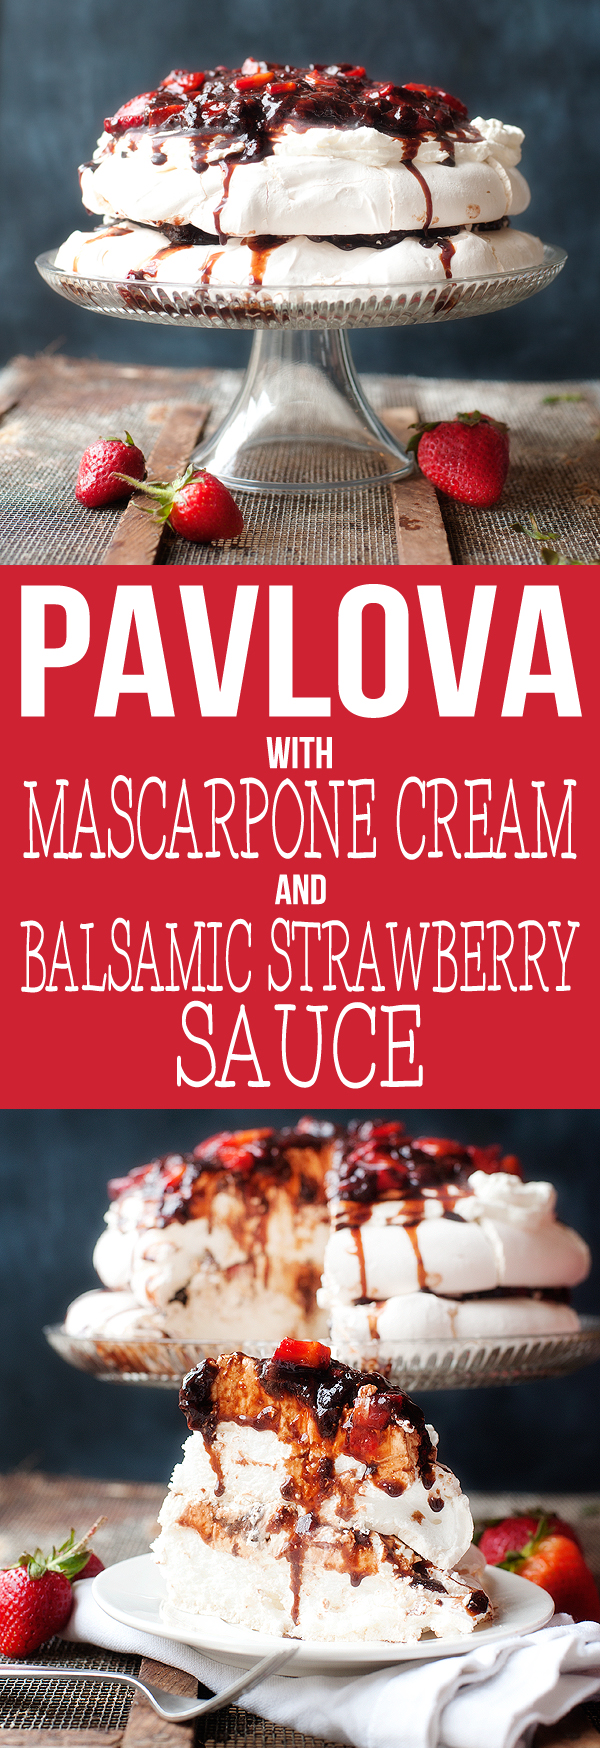 pavlova with mascarpone whipped cream & balsamic strawberry sauce